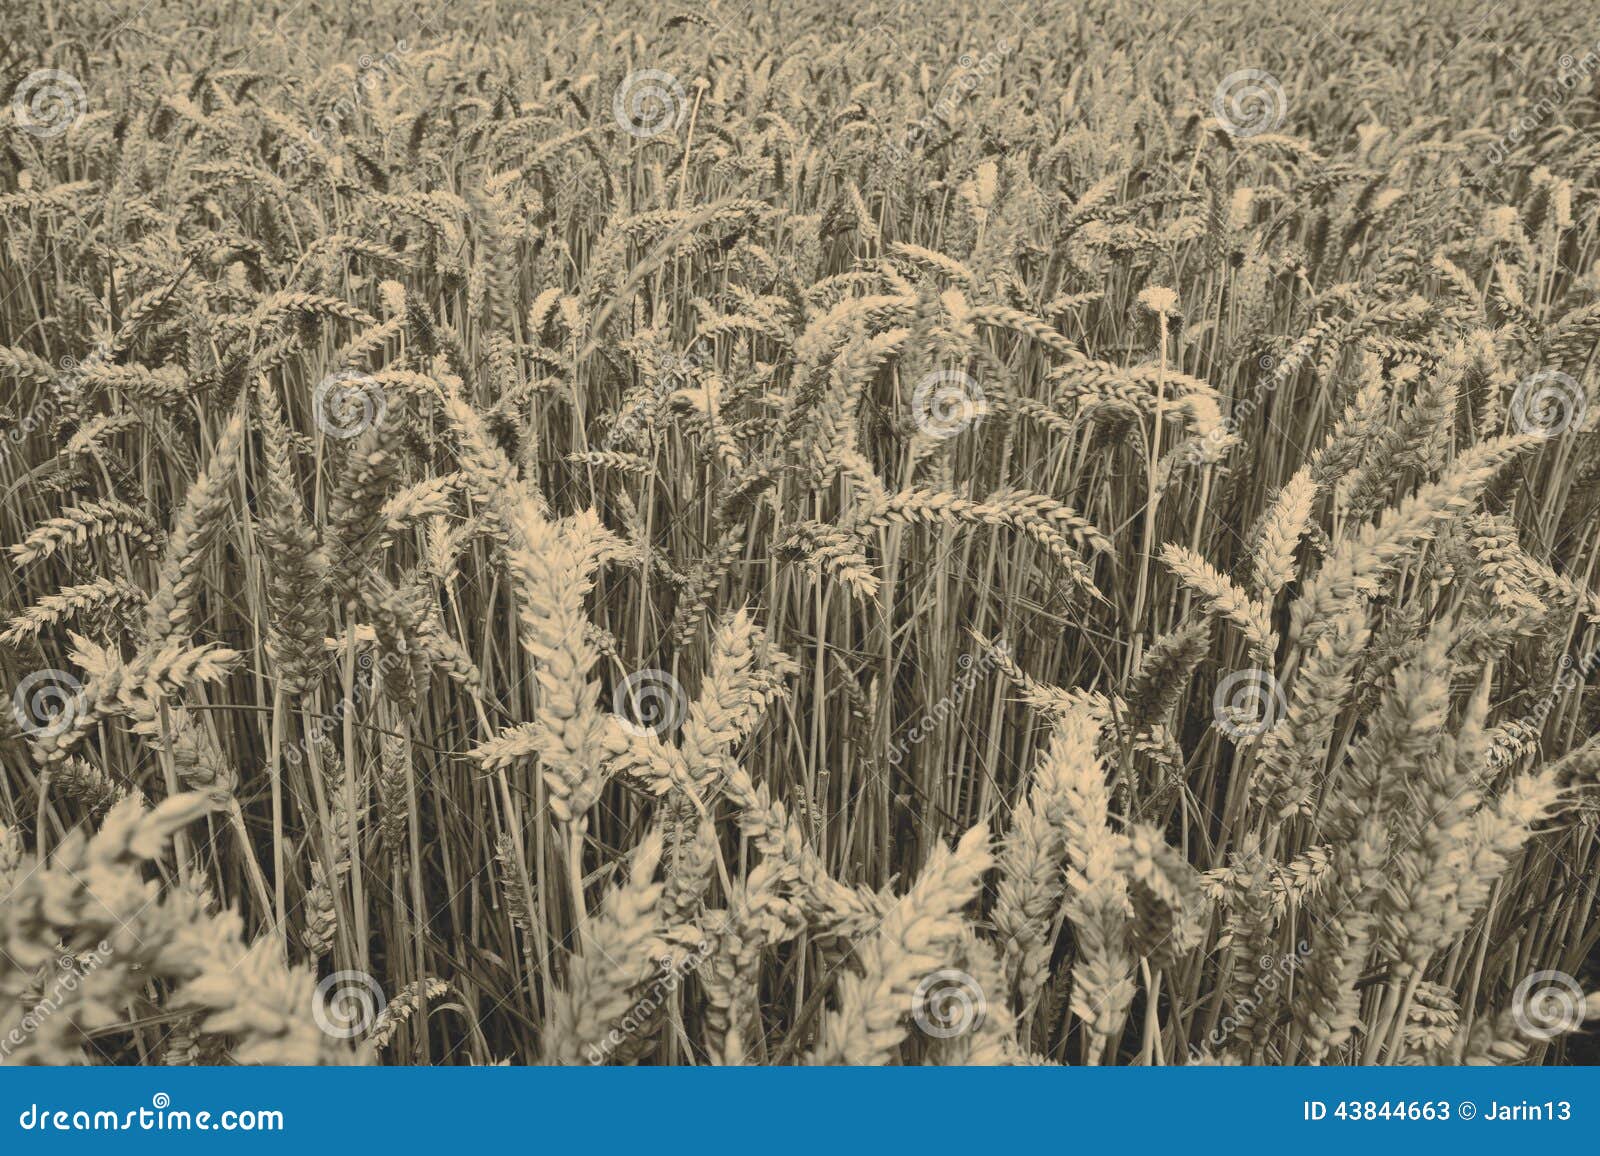 Grain harvest - barley, wheat, straw